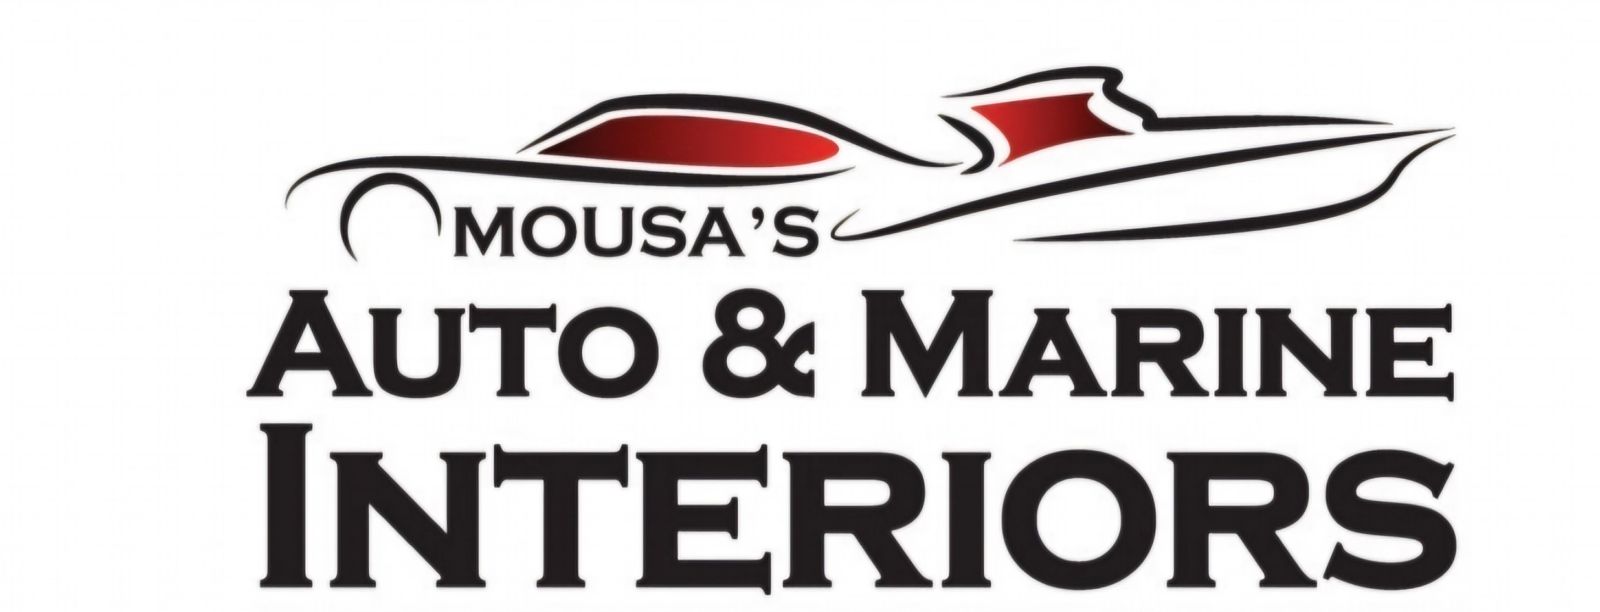 Mousa's Auto & Marine Interiors